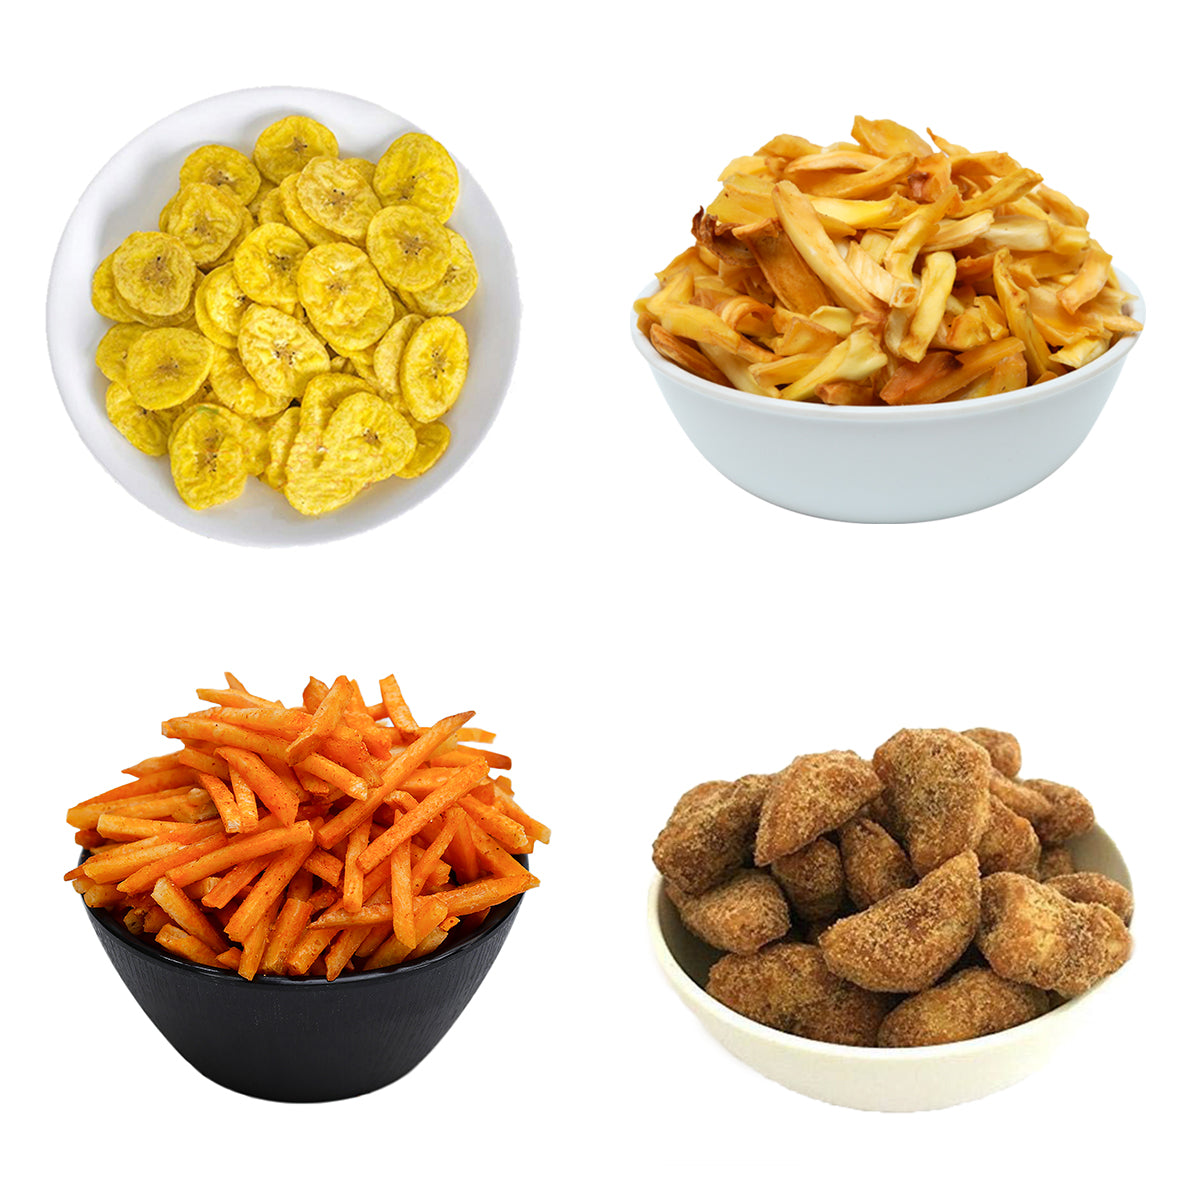 Kerala Chips Combo - Banana Chips (250g), Jackfruit Chips (250g), Jaggery Coated Banana Chips (250g), Tapioca Chips (250g) - 1kg